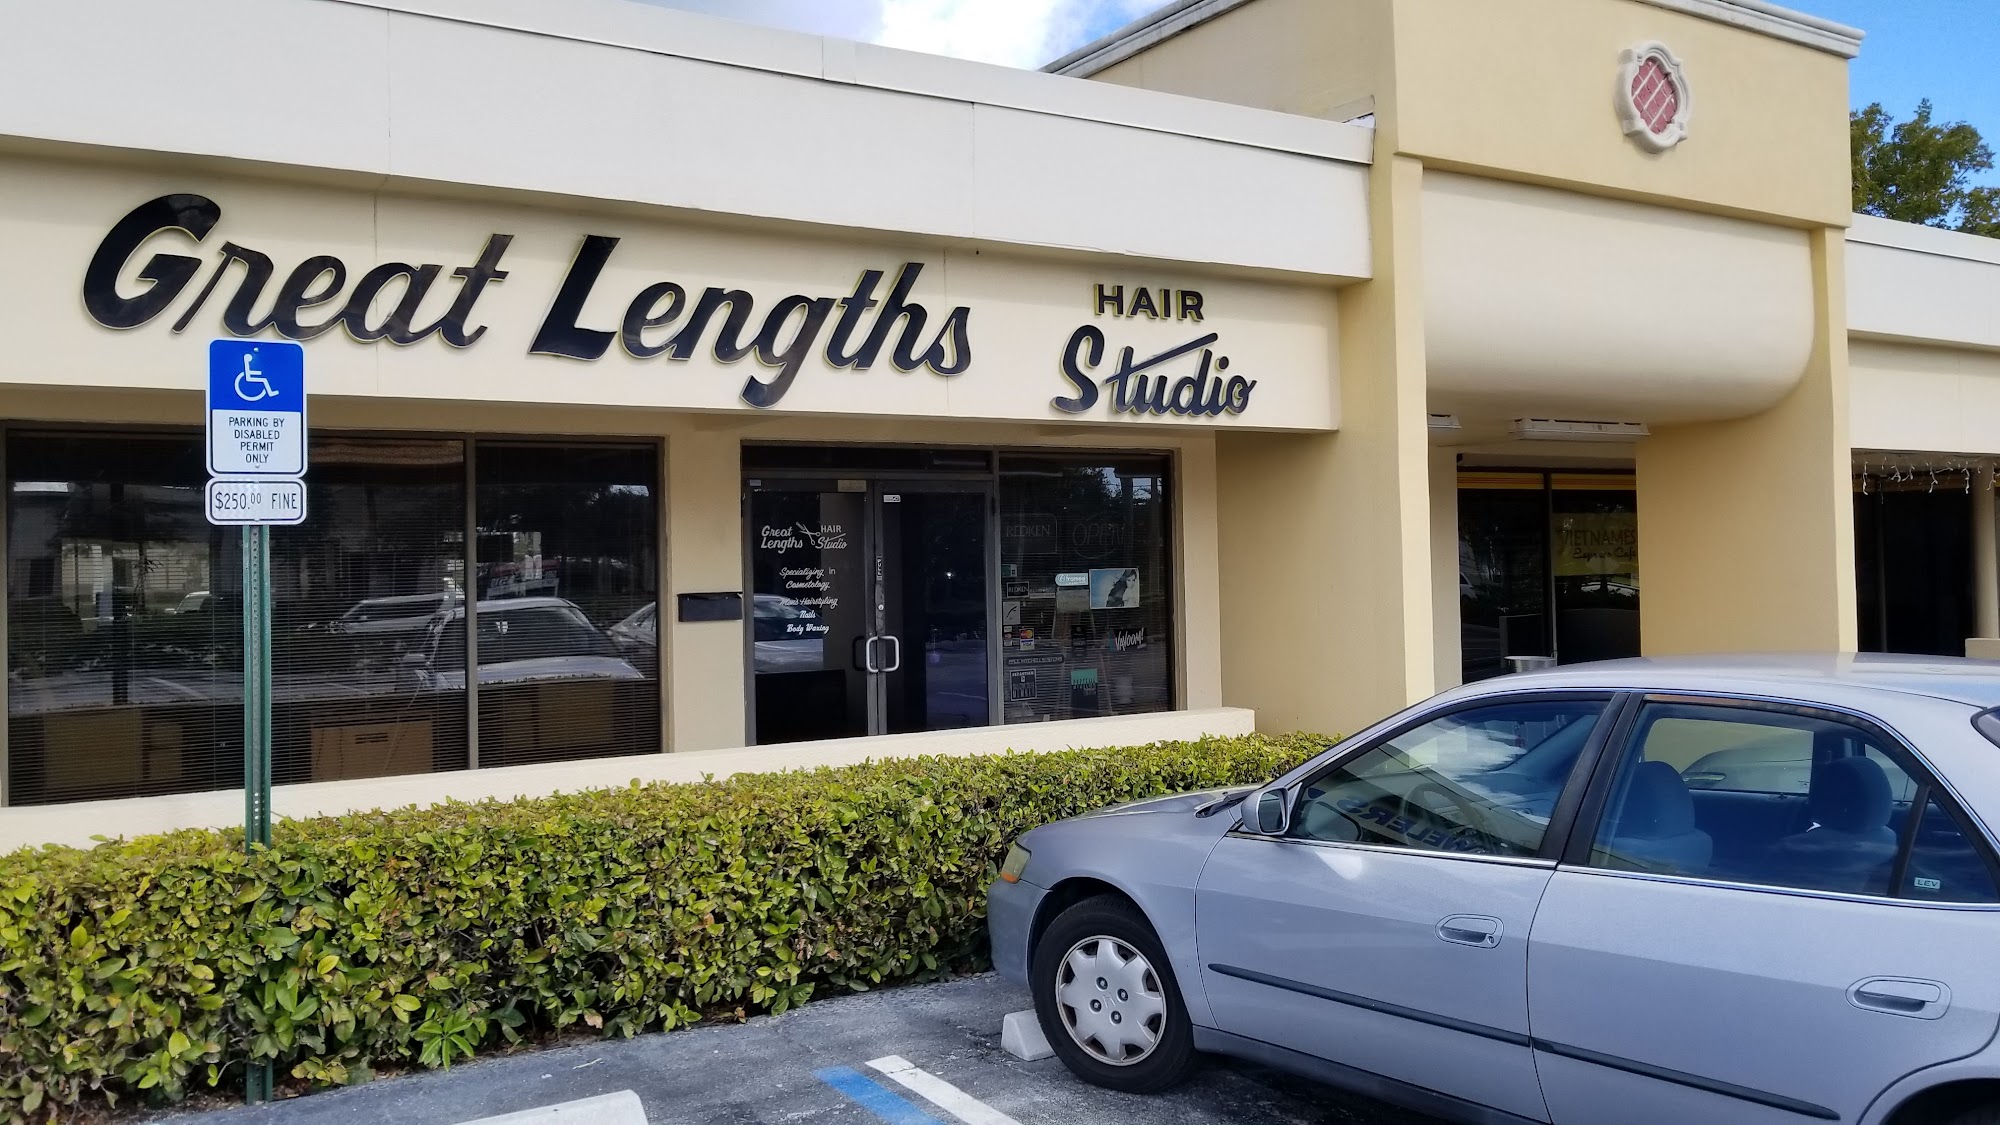 Great Length's Hair Studio